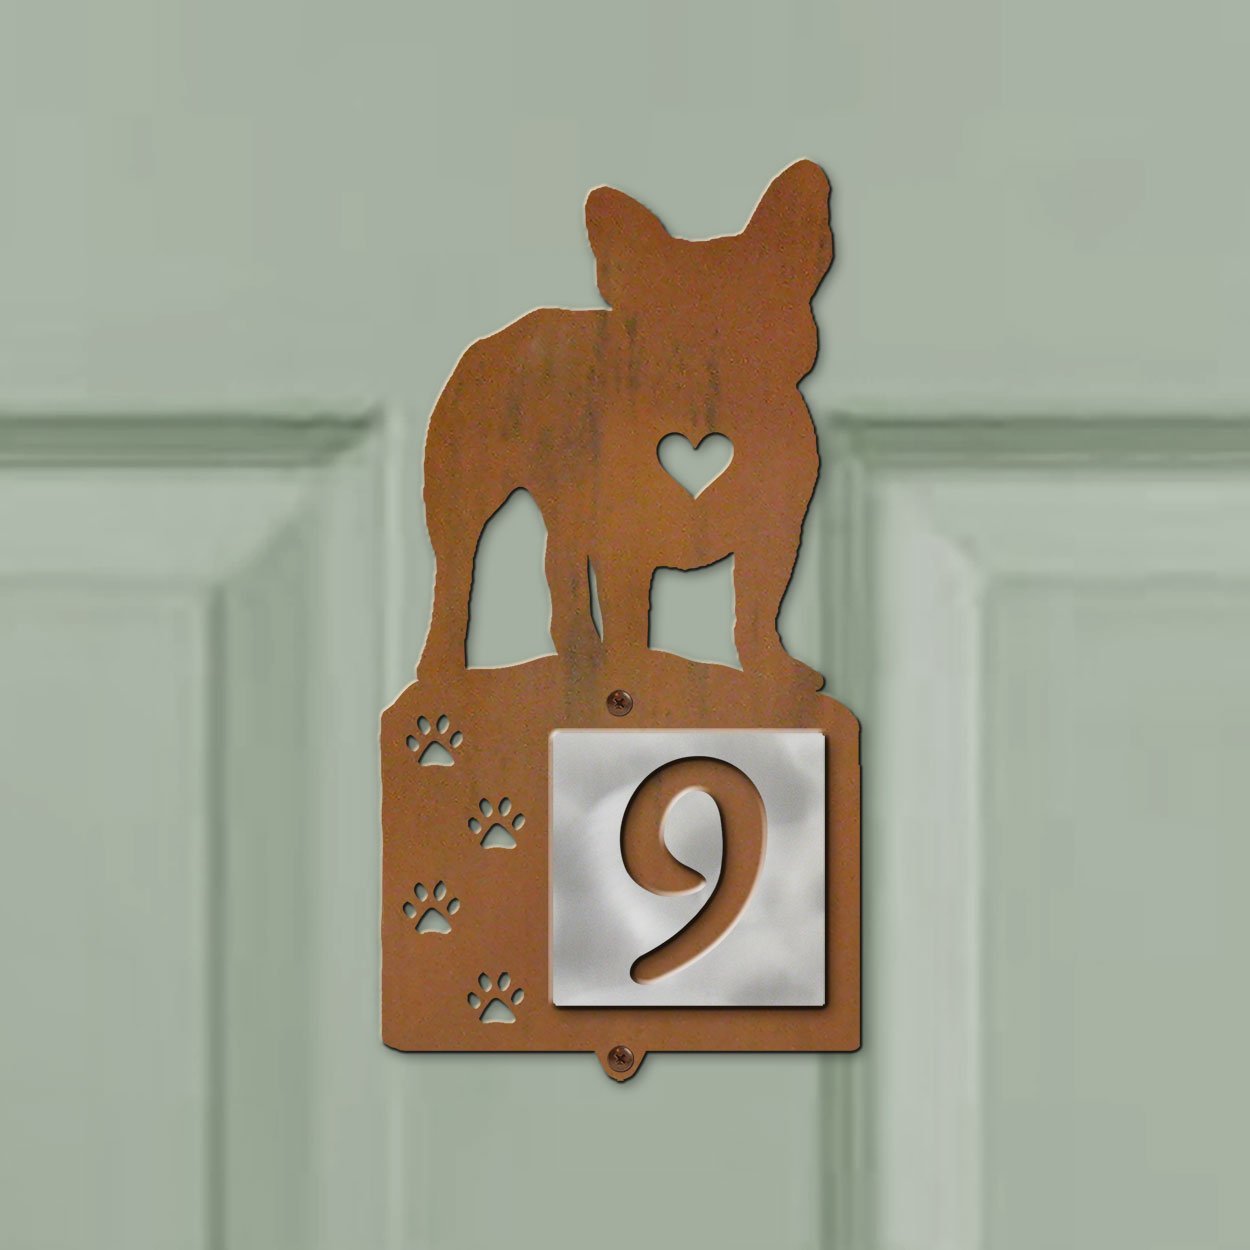 606211 - French Bulldog Nose Prints One-Digit Rustic Tile Door Number